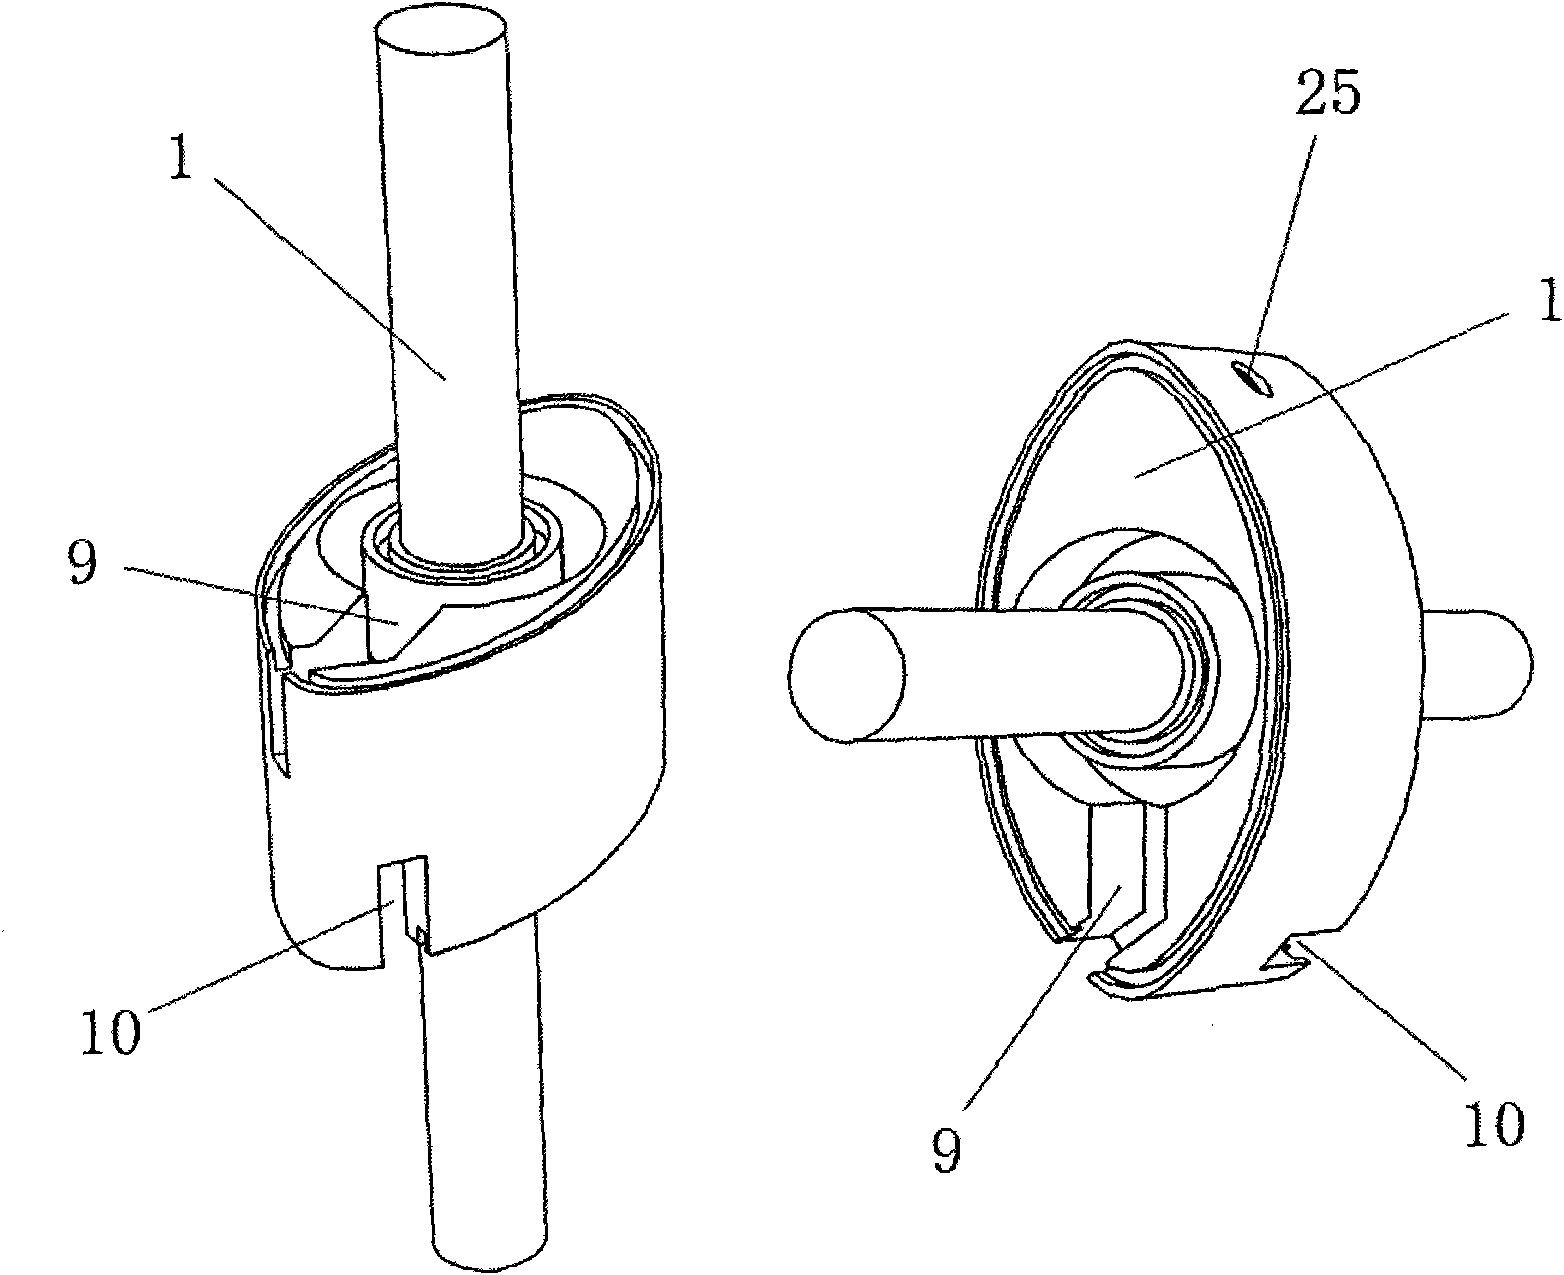 Cycloid rotor engine